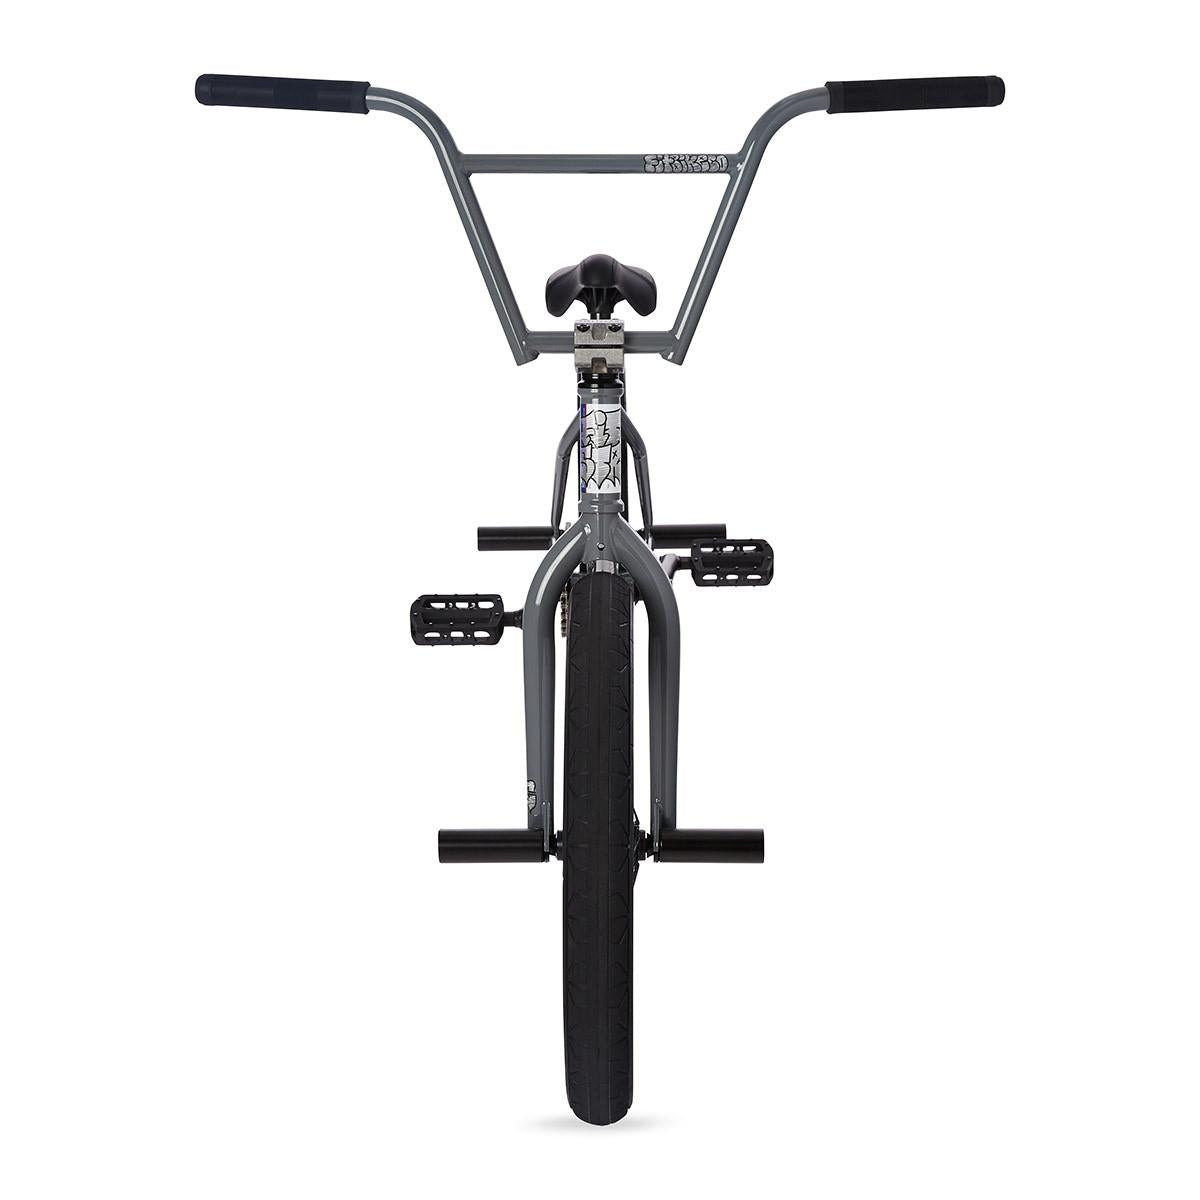 Fit STR Freecoaster (MD) BMX Bicicleta